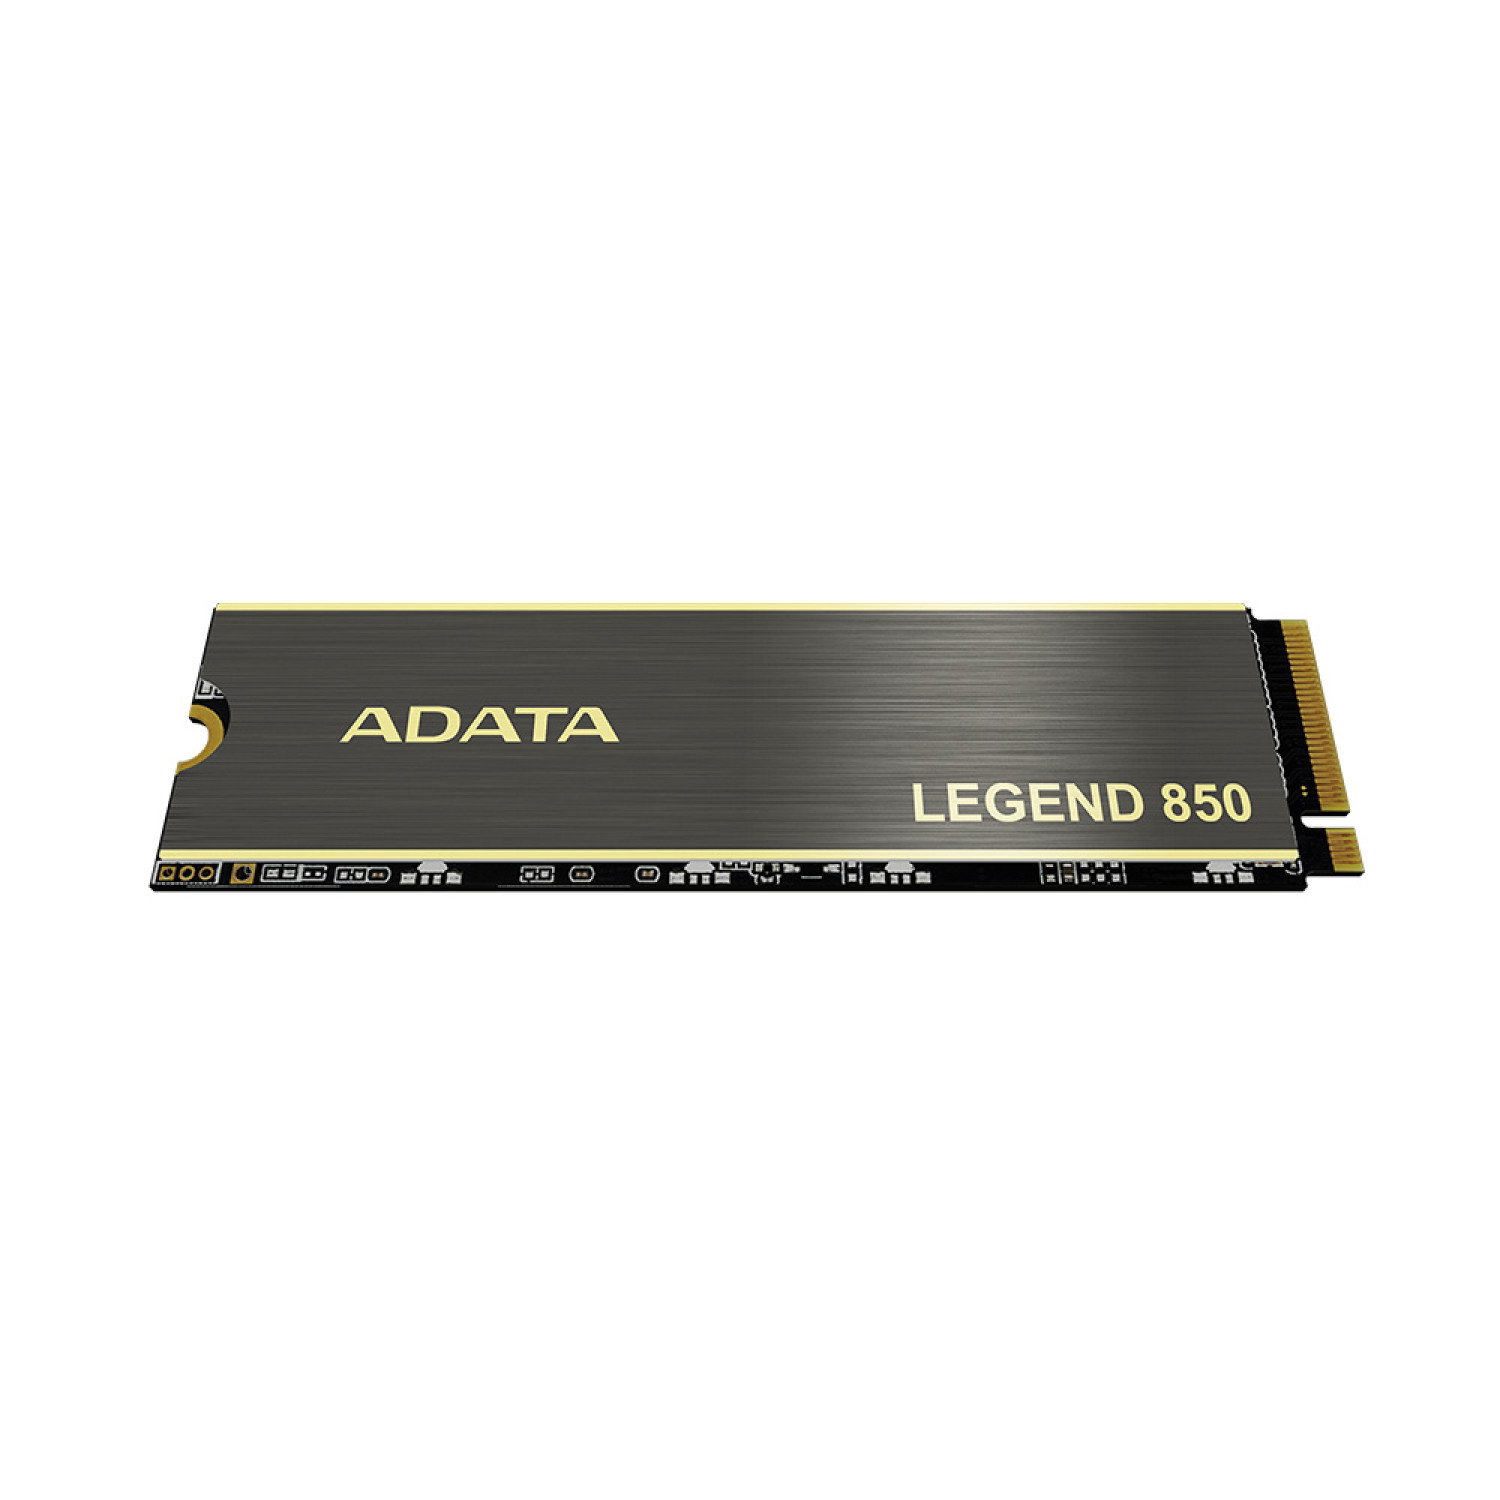 حافظه اس اس دی ADATA Legend 850 1TB - for PS5-4